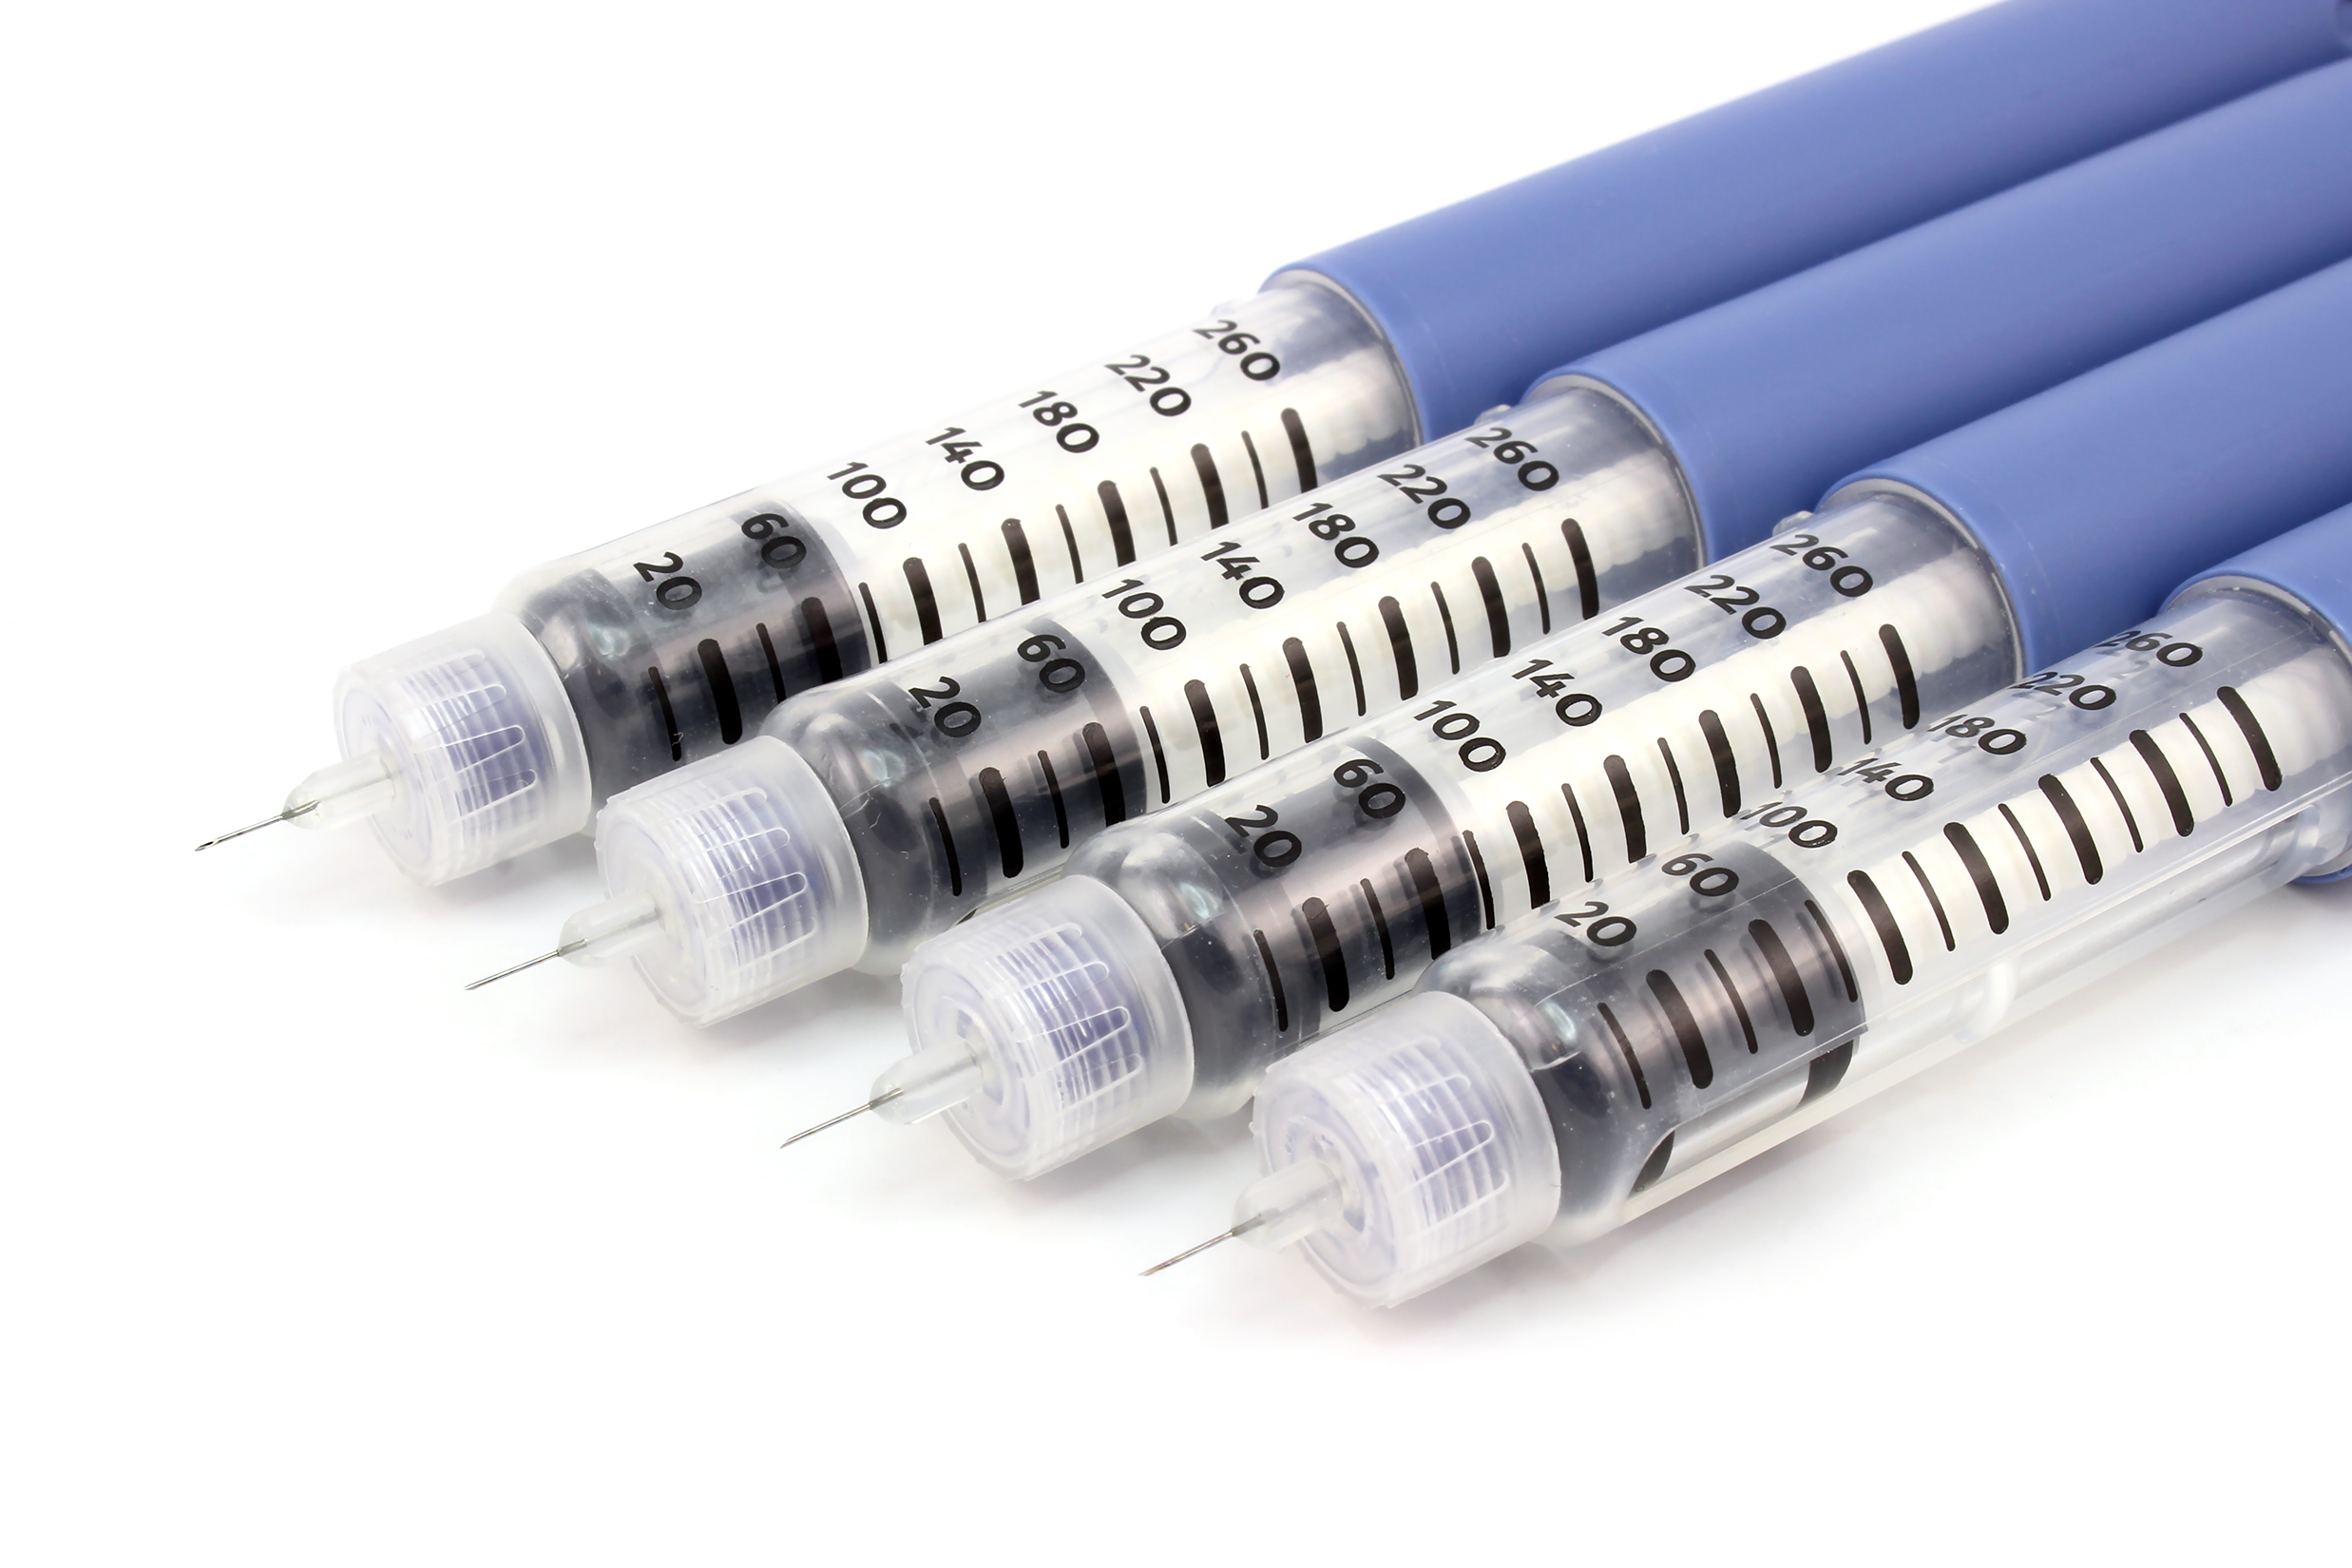 Risks Associated with Reusing Insulin Pen Needles